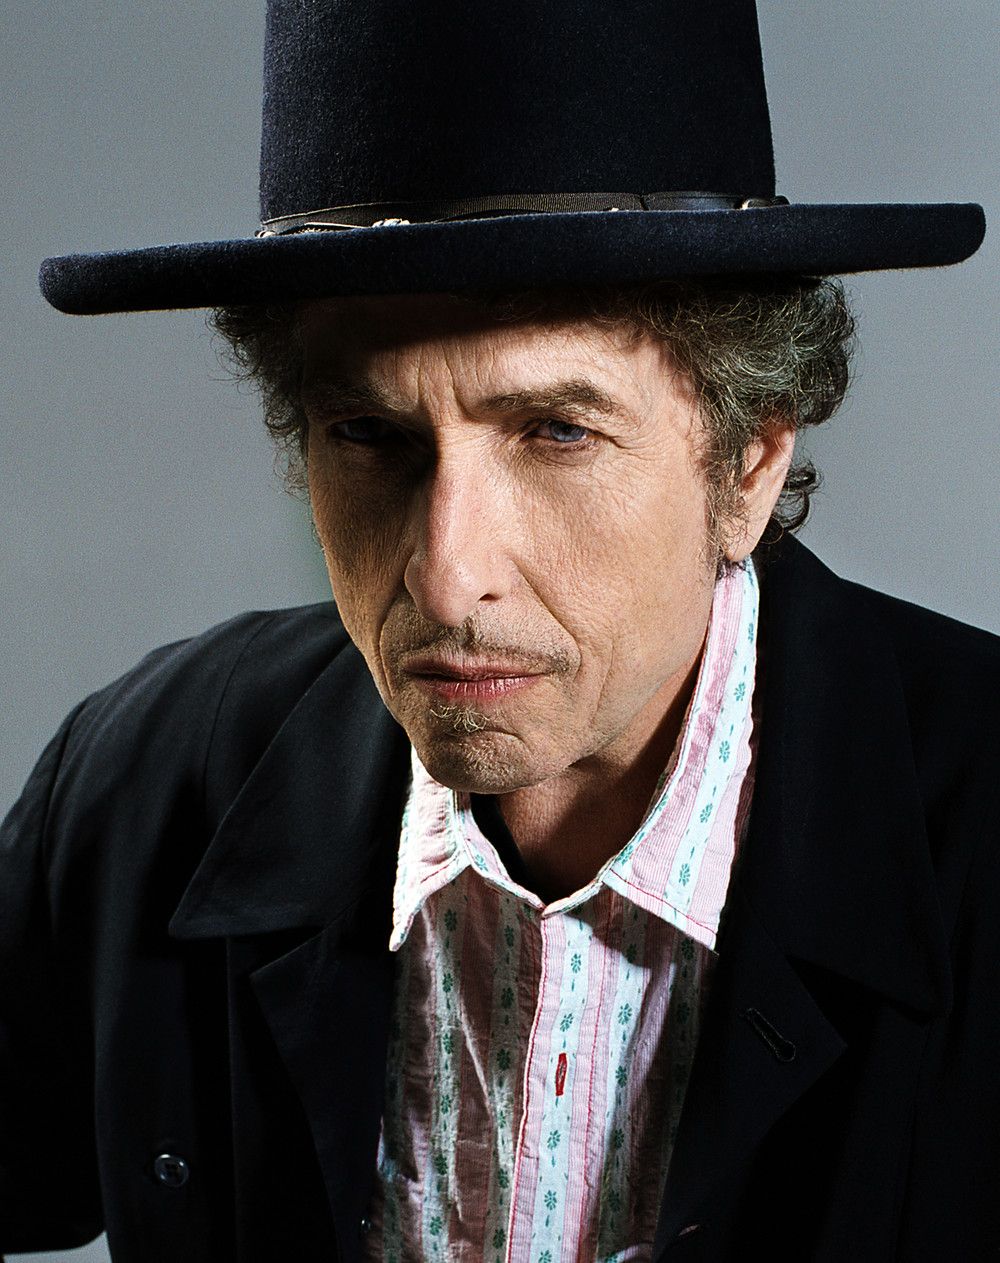 Bob Dylan looks like Adam Sandler playing Bob Dylan.